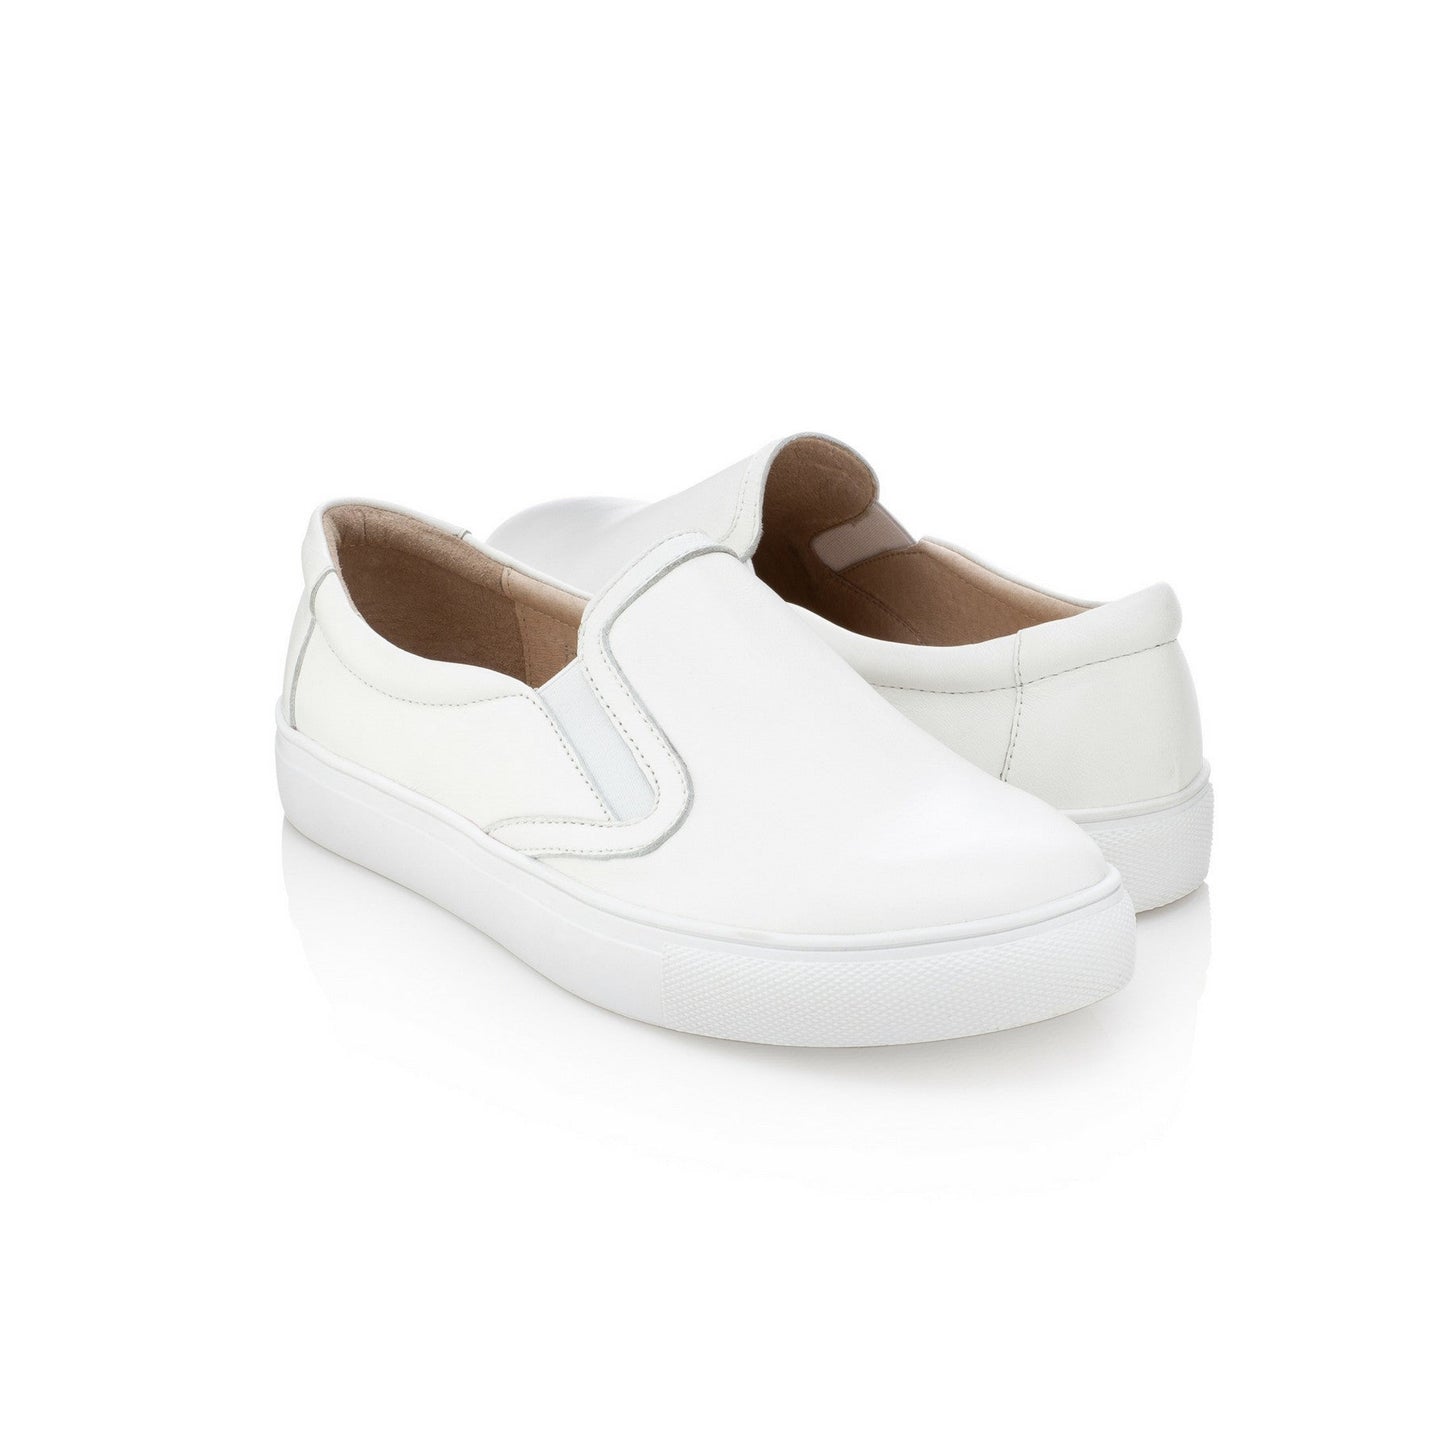 Slip-on Sneakers in powder white